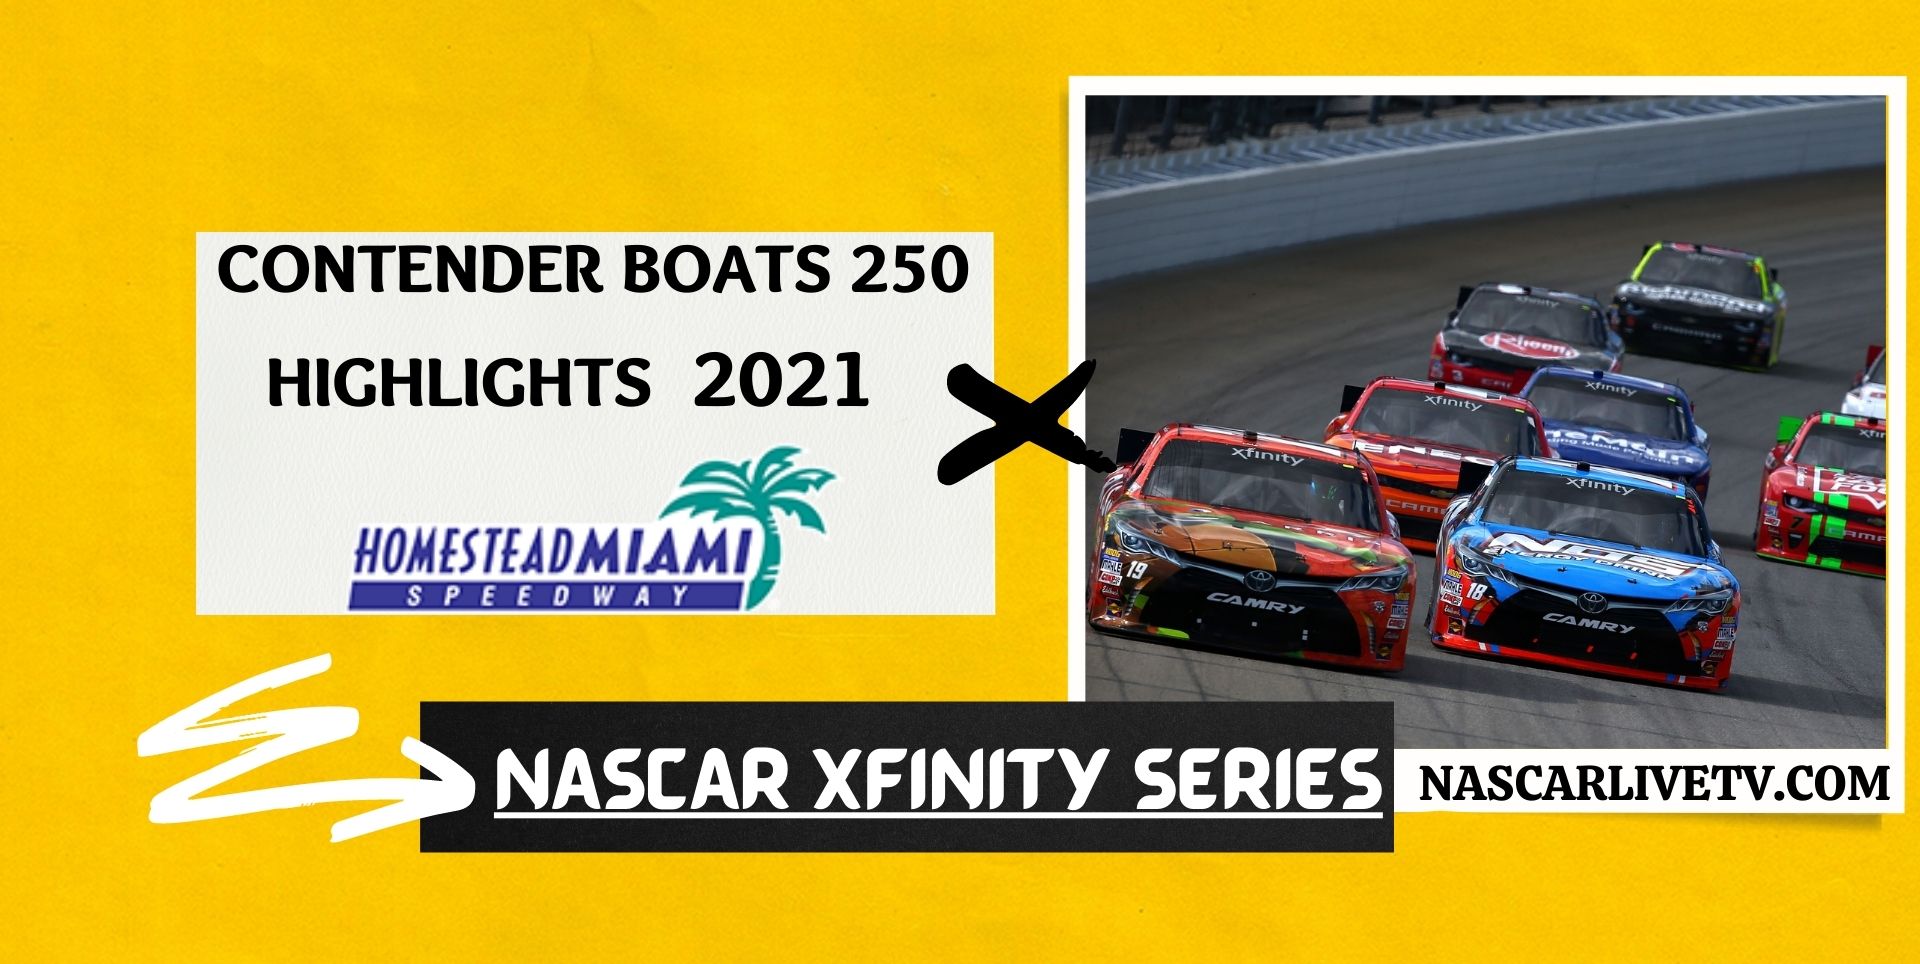 Contender Boats 250 Highlights NASCAR Xfinity Series 2021